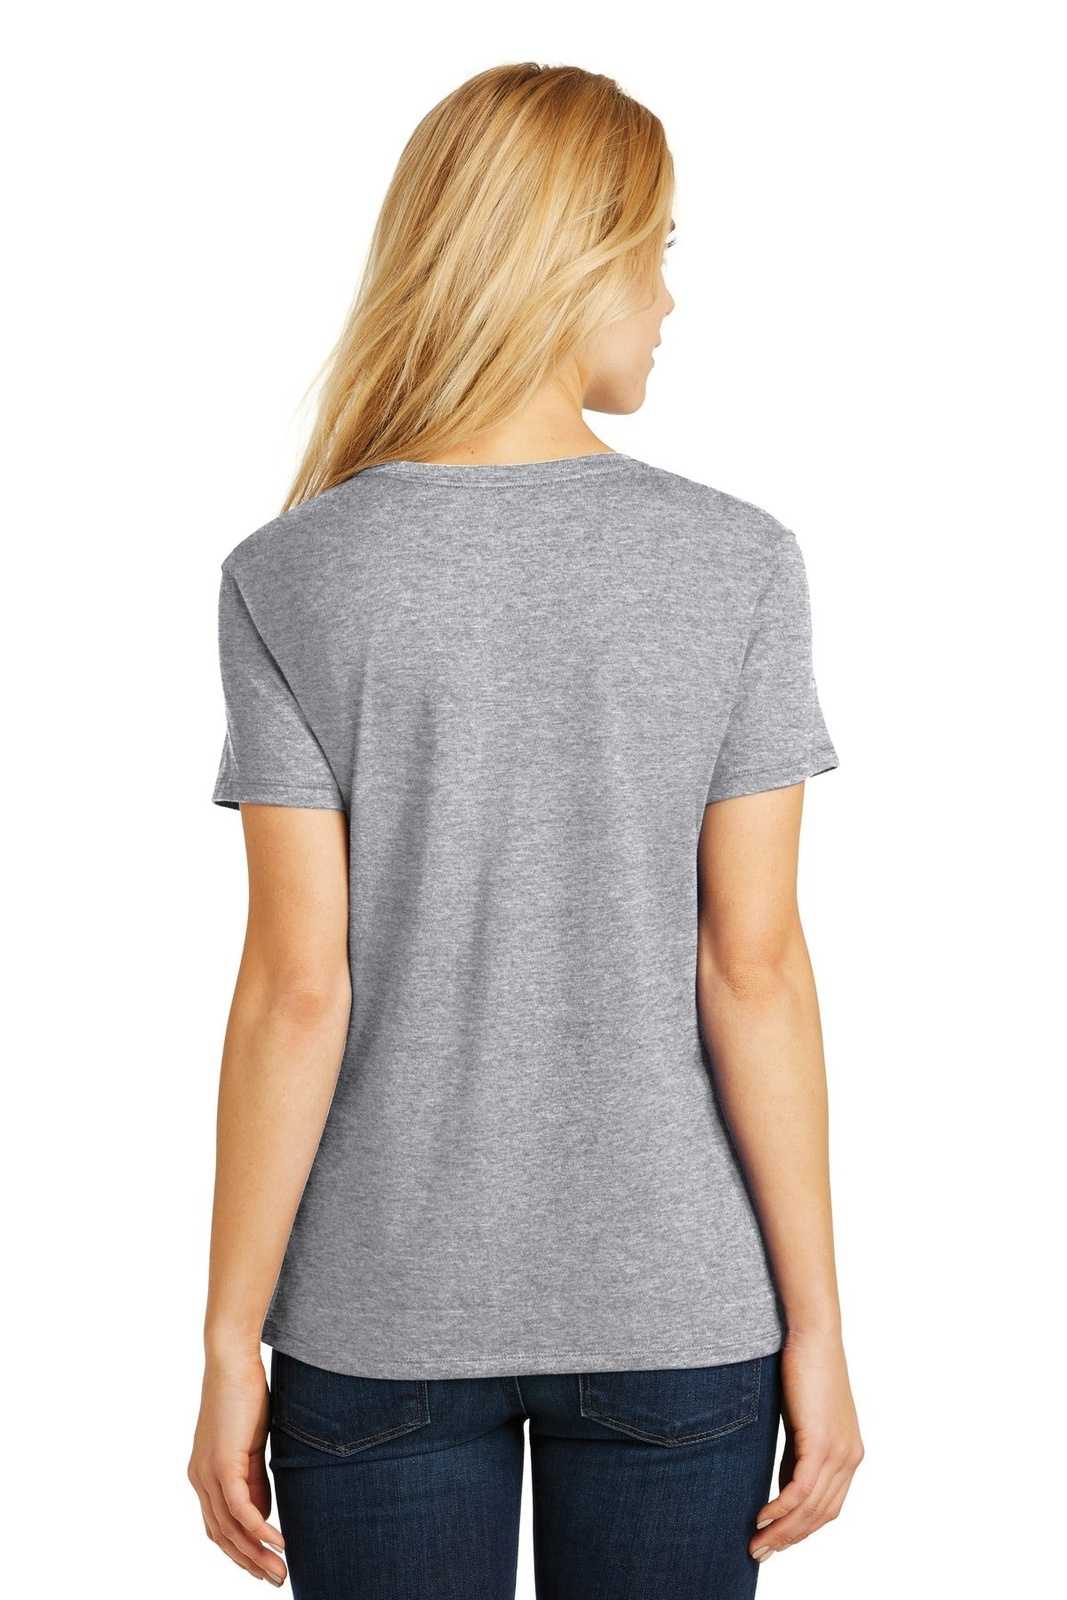 Hanes SL04 Ladies Nano-T Cotton T-Shirt - Light Steel - HIT a Double